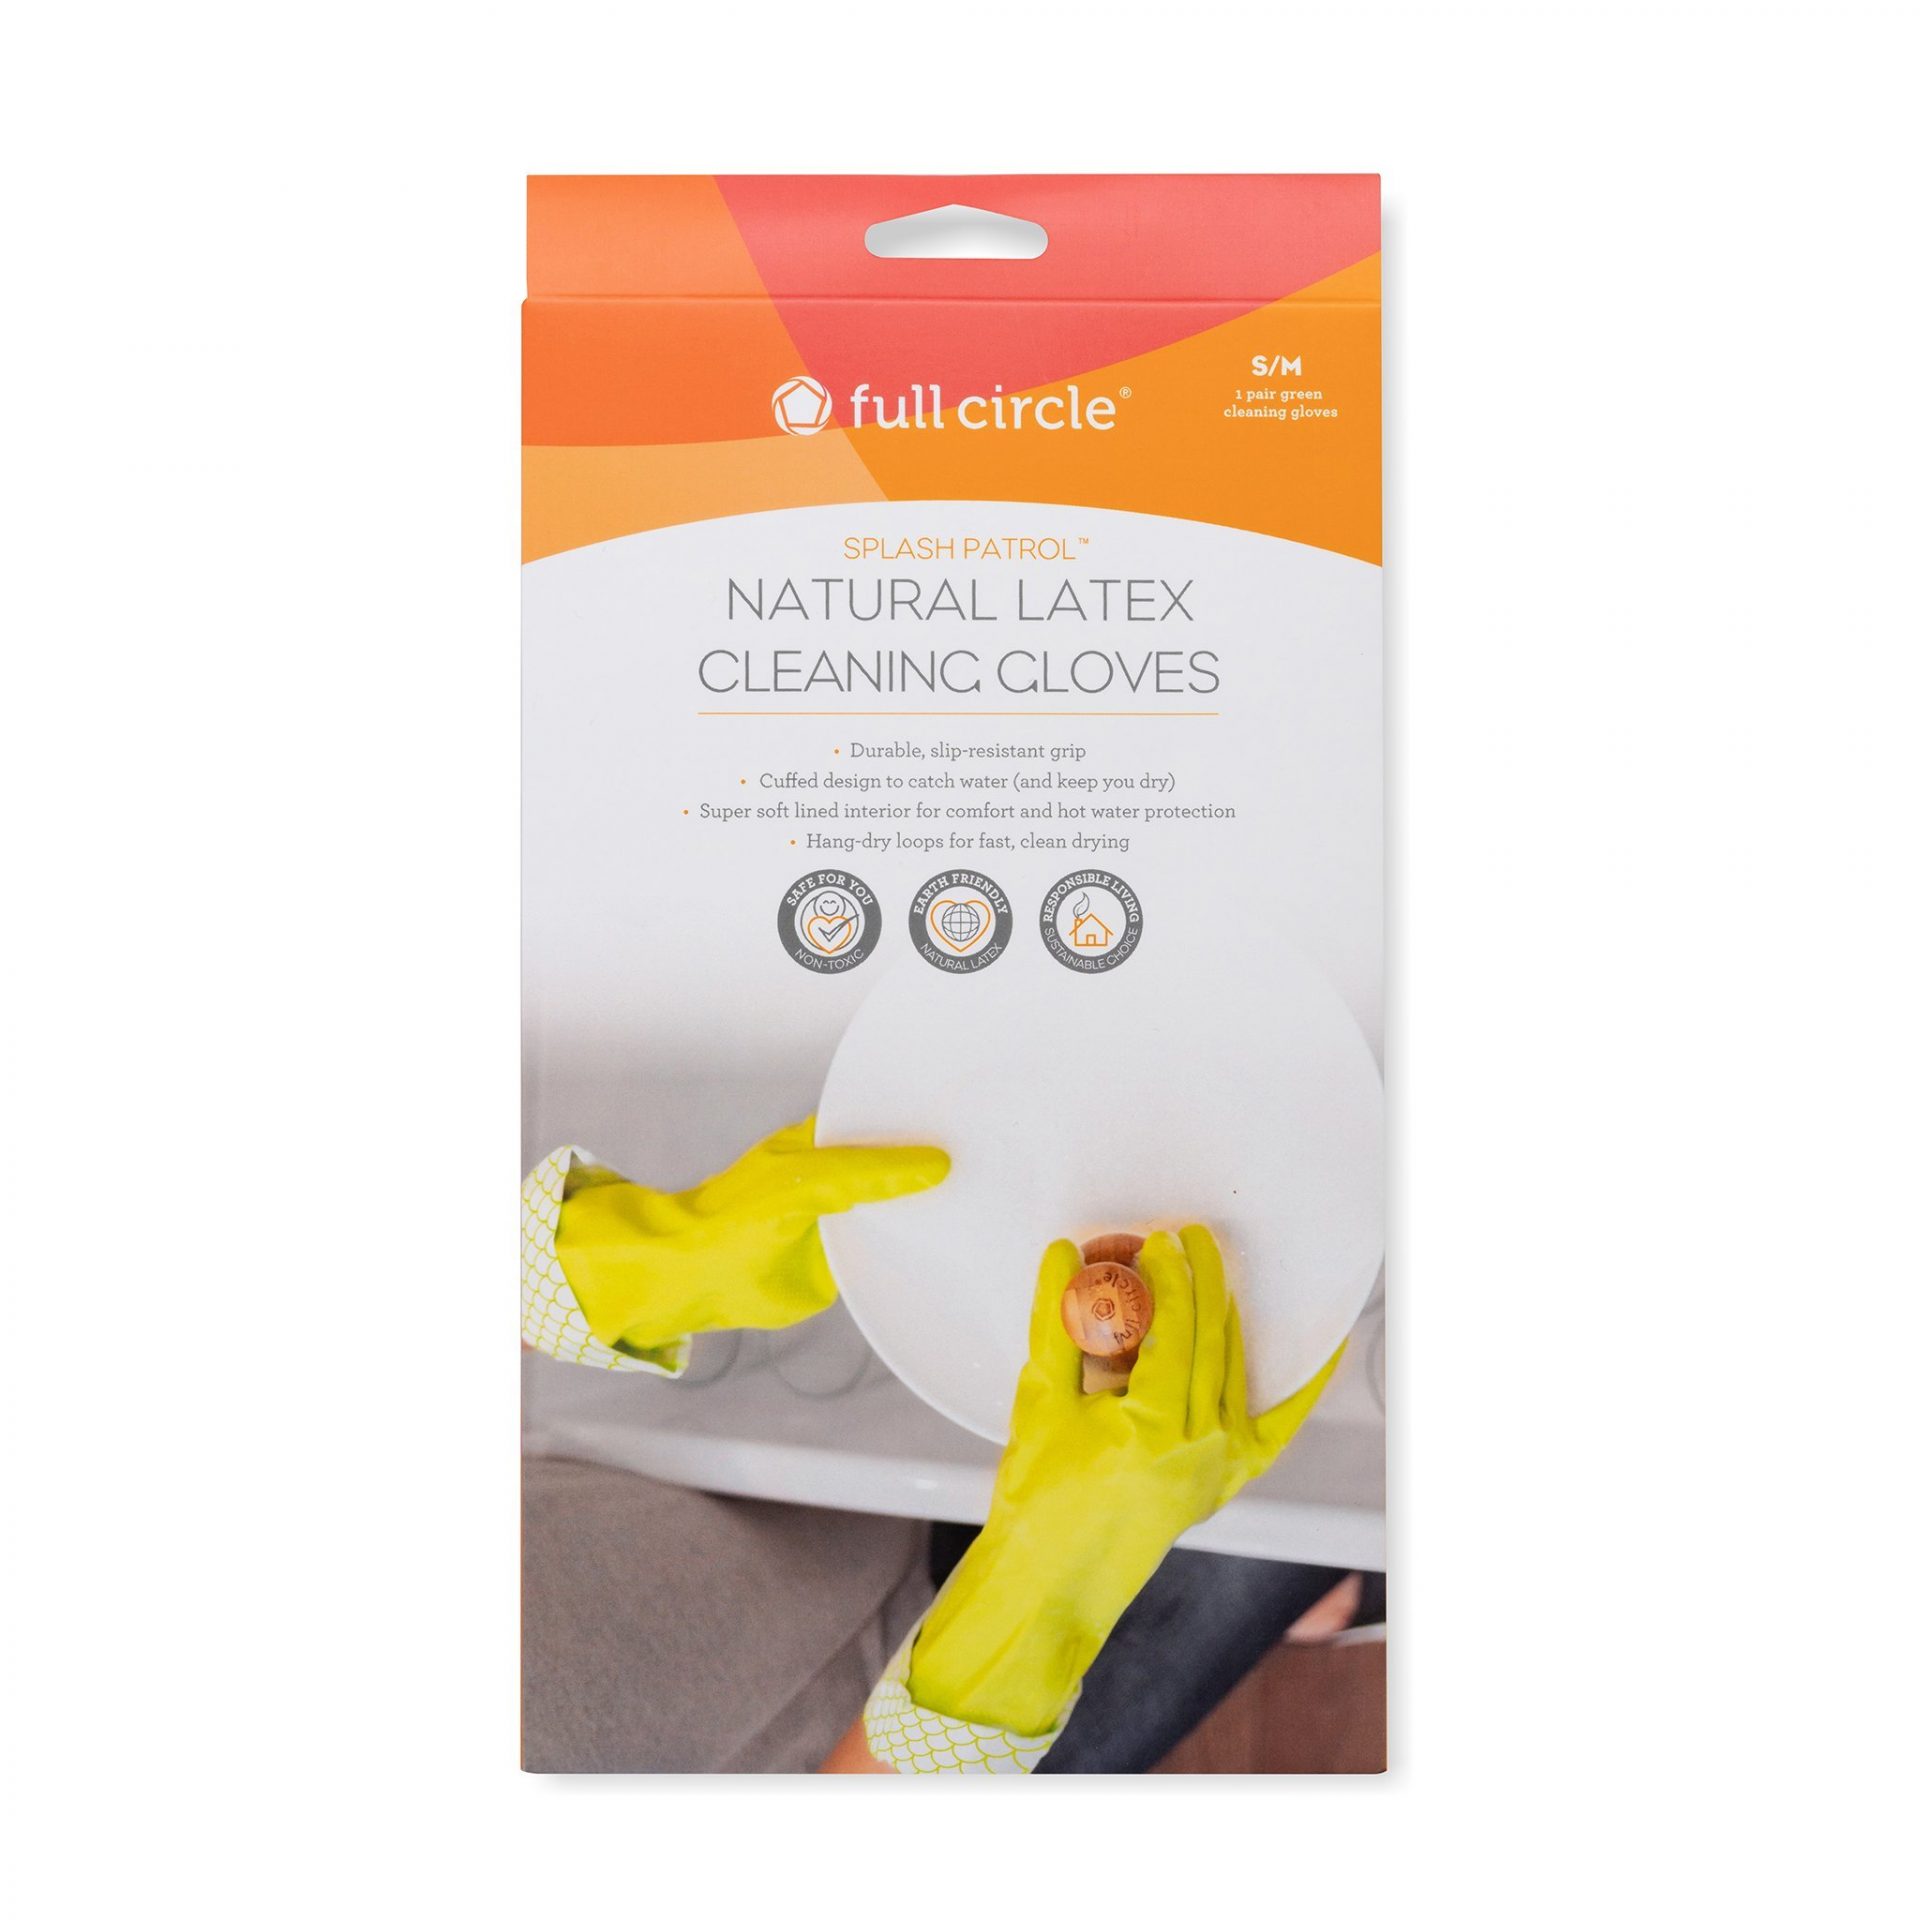 Full Circle Splash Patrol Natural Latex Cleaning Gloves Large Green Product Image 2